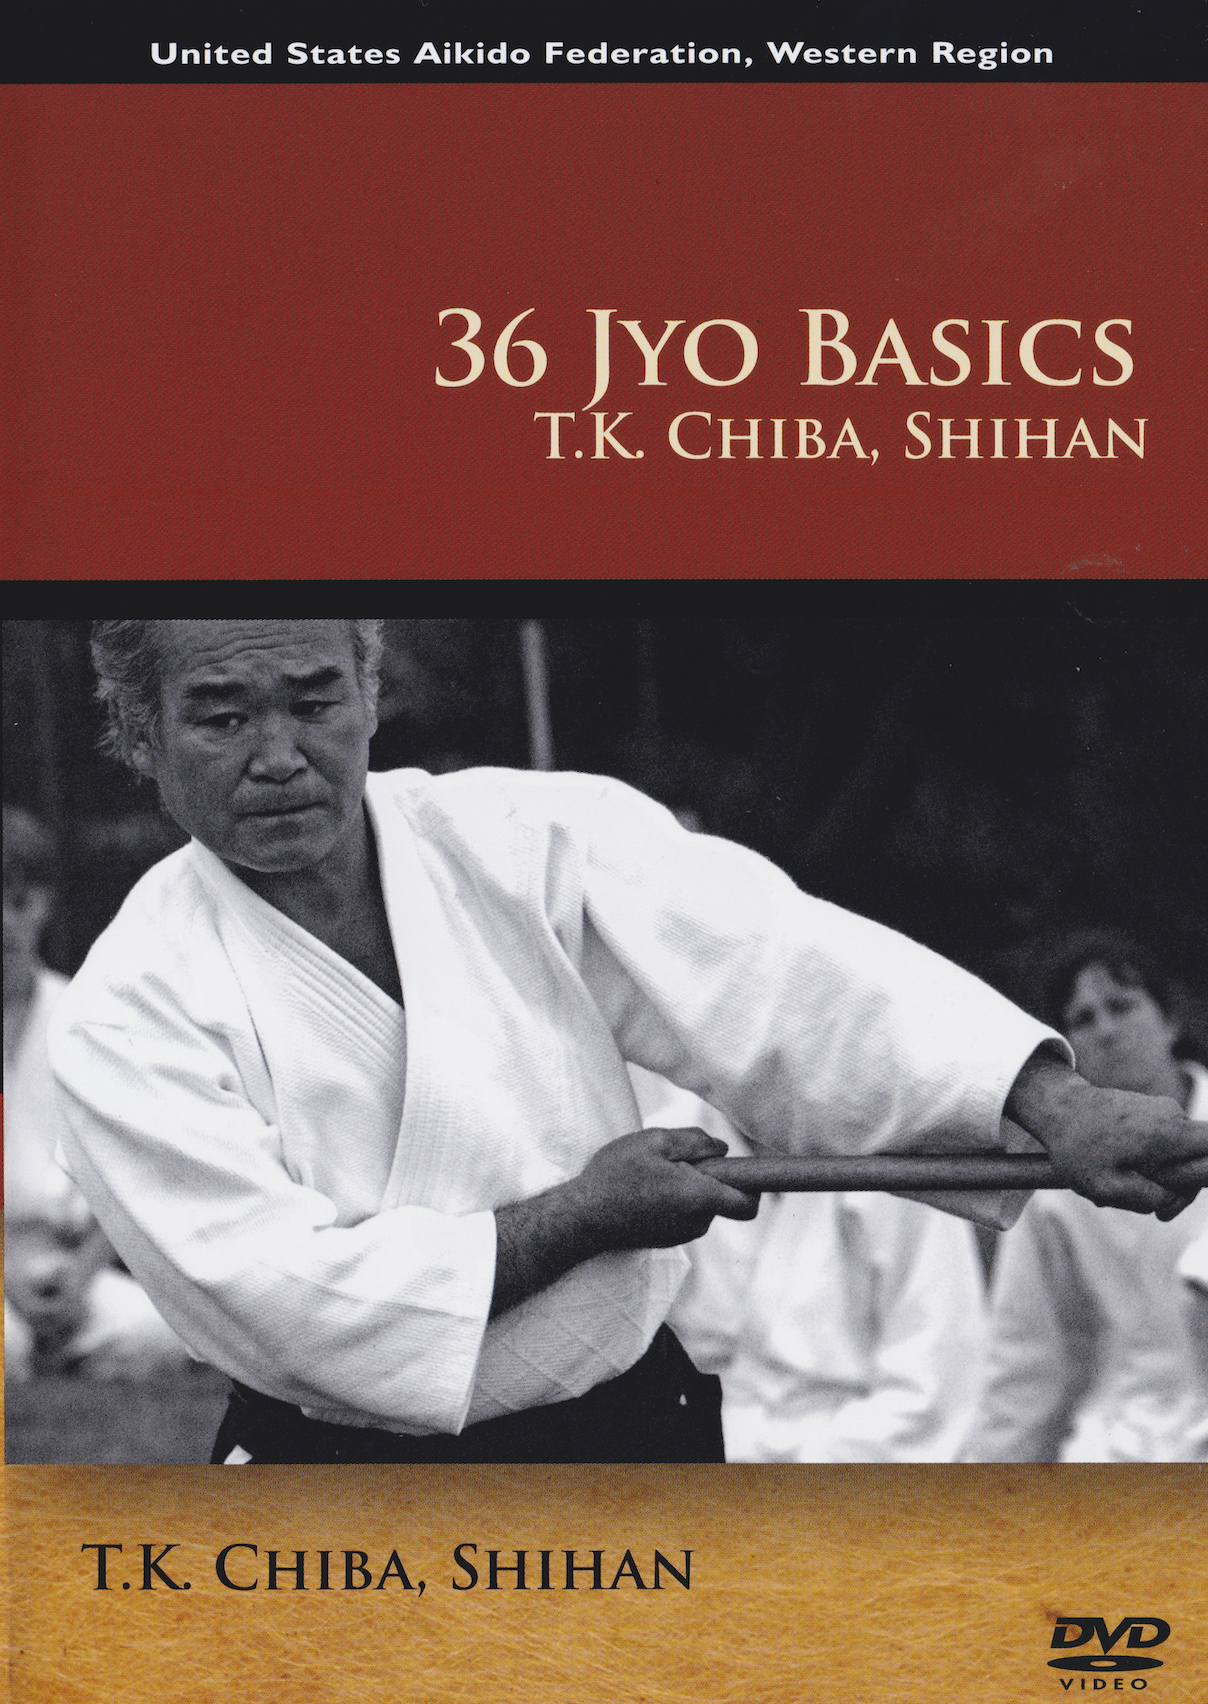 36 Jyo Basics DVD with TK Chiba - Budovideos Inc